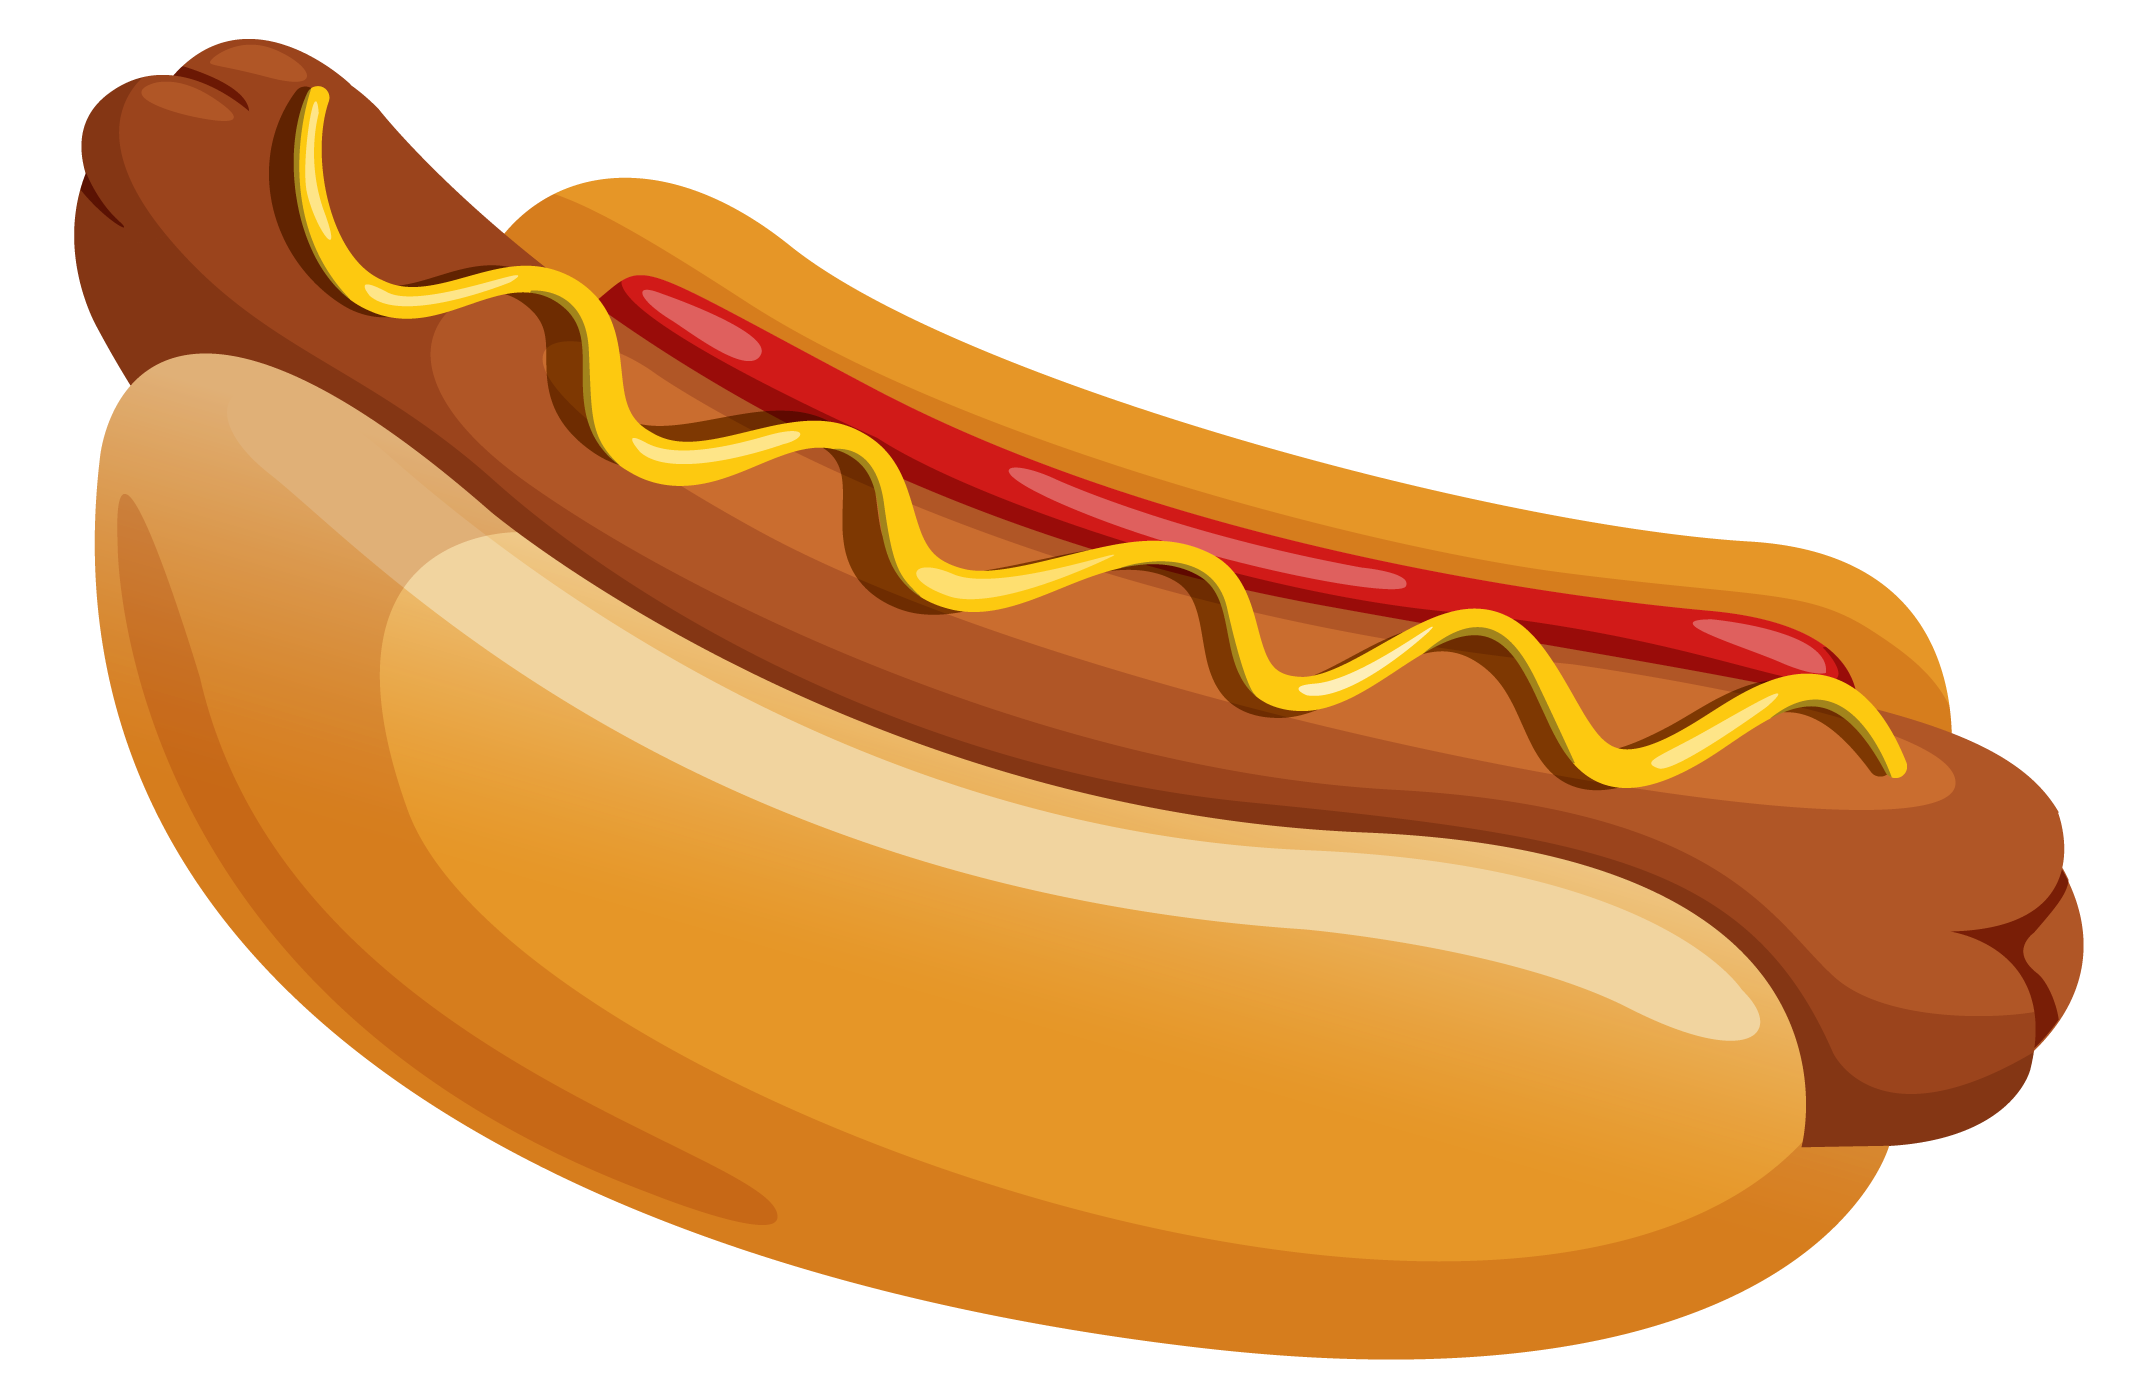 Hot Dog Png Transparent